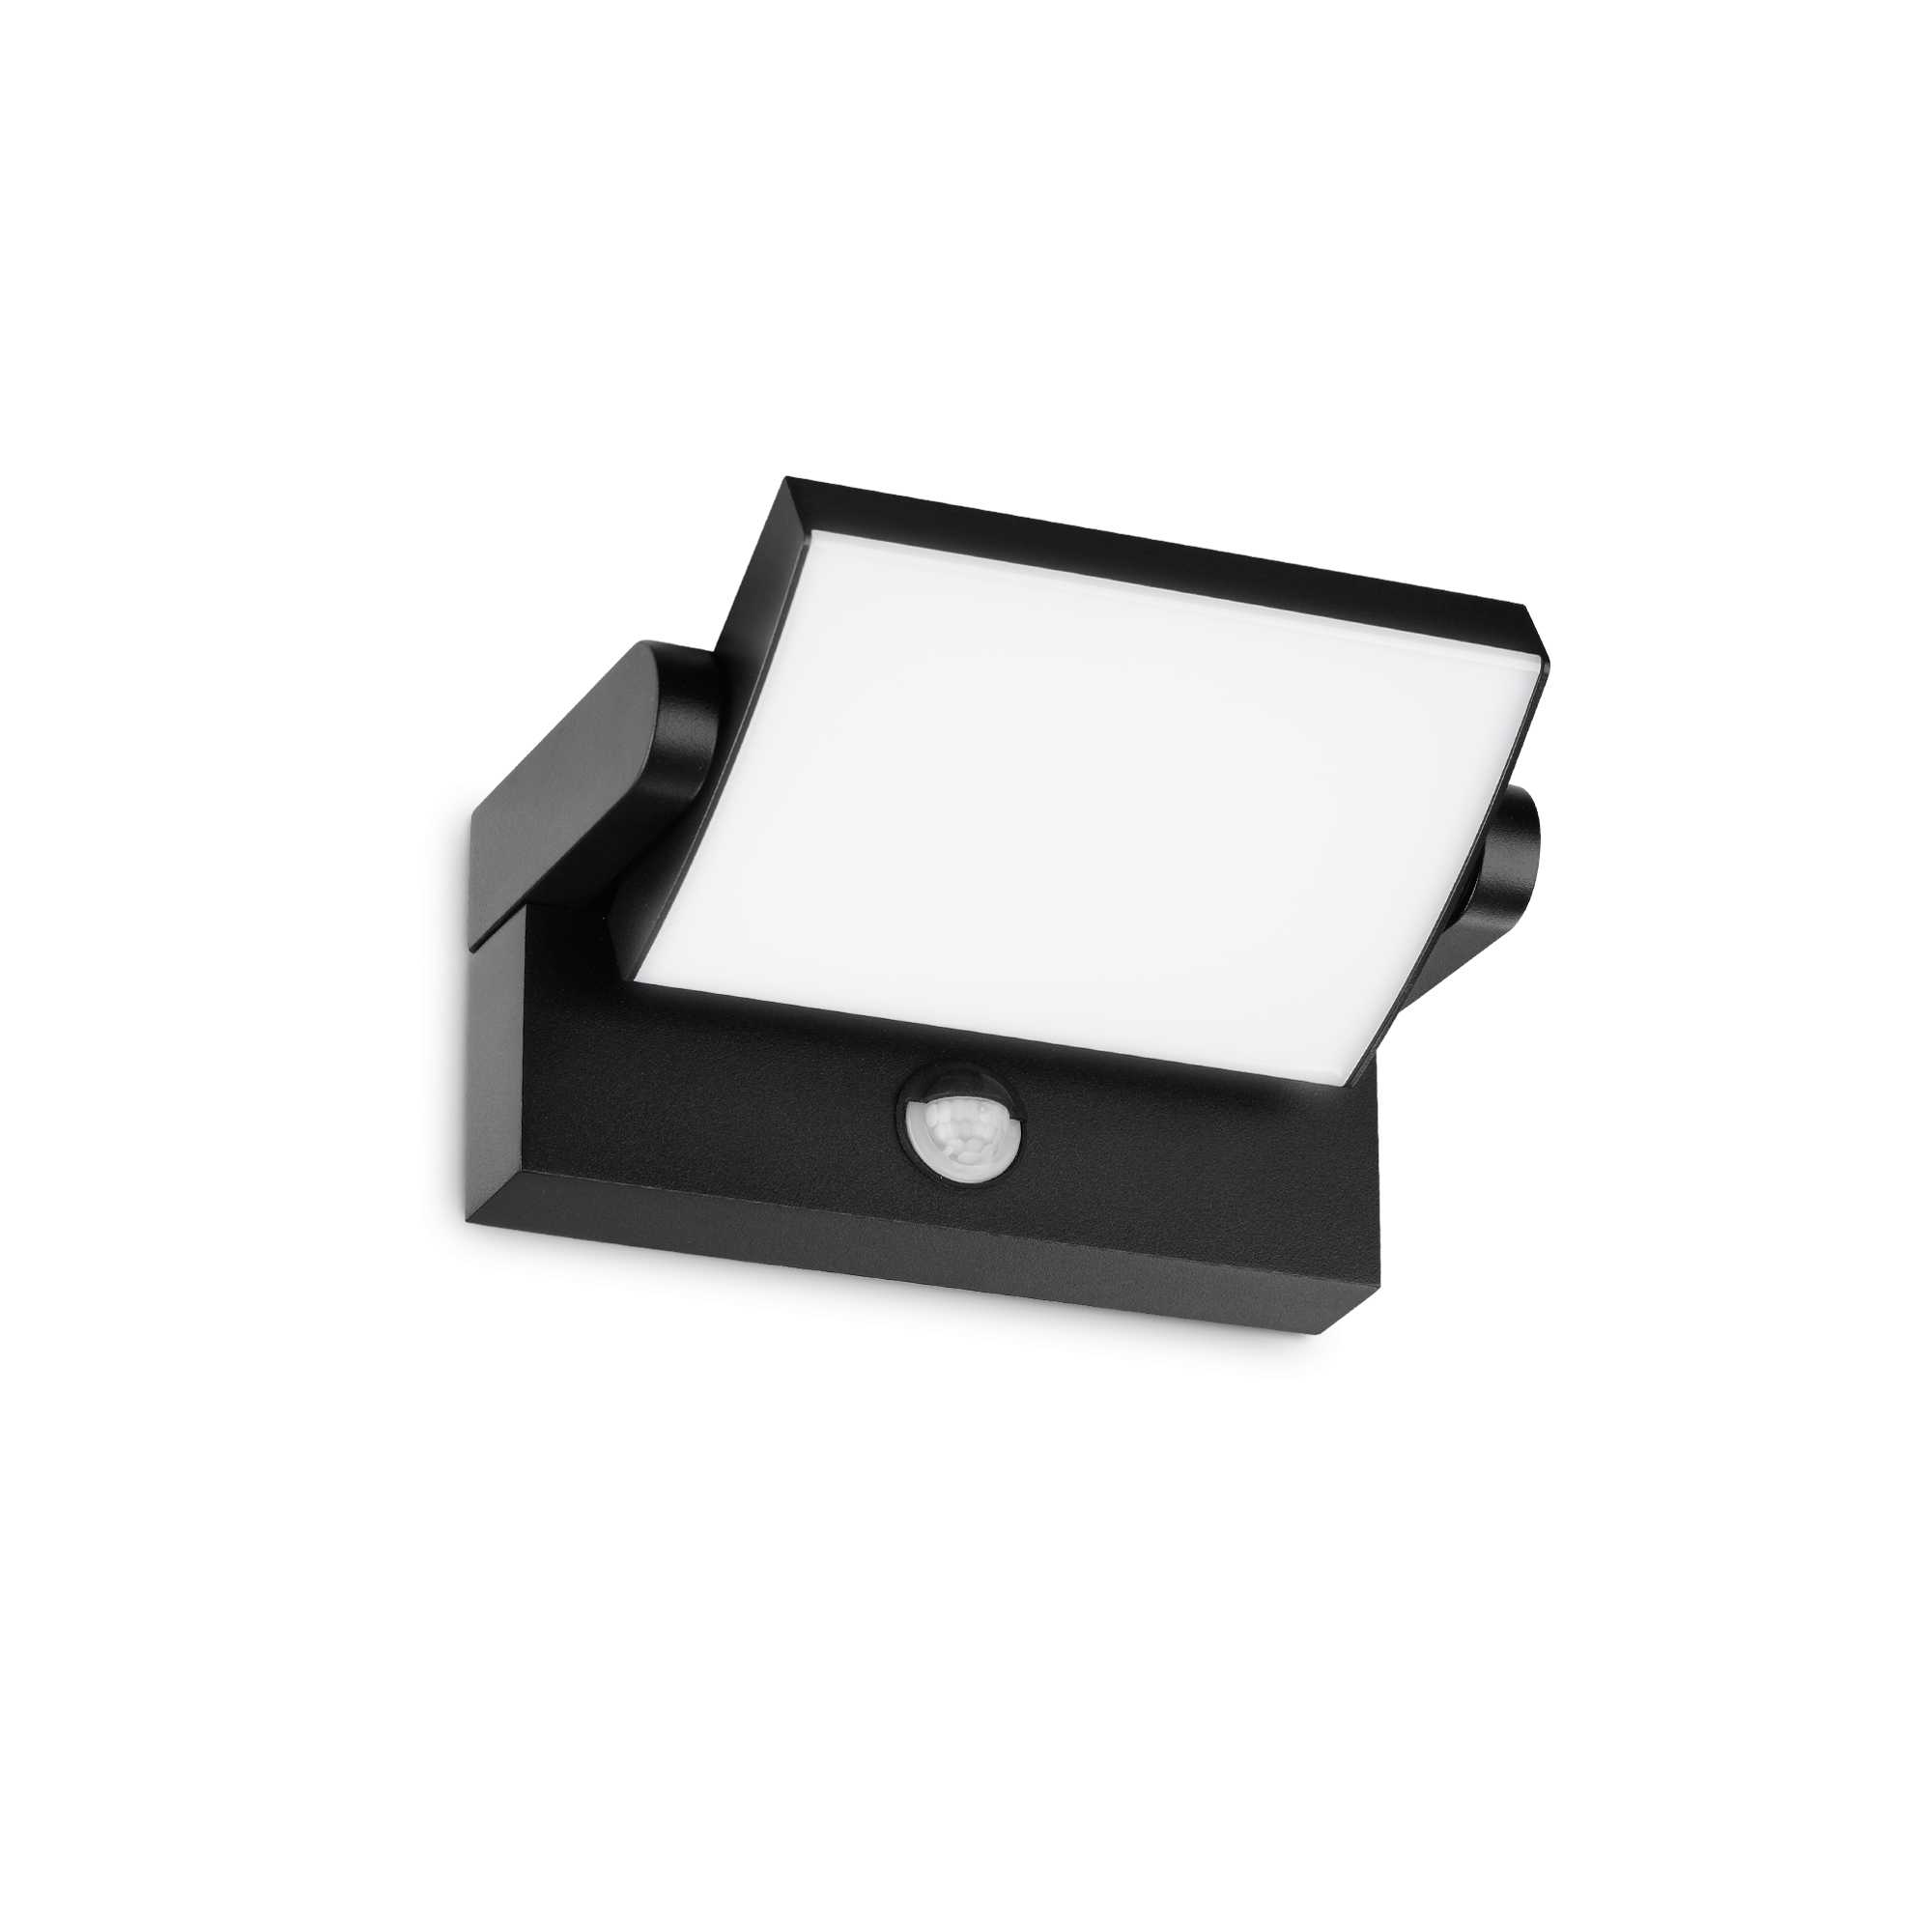 AD hotelska oprema Vanjska zidna lampa Swipe ap sensor- Crne boje slika proizvoda